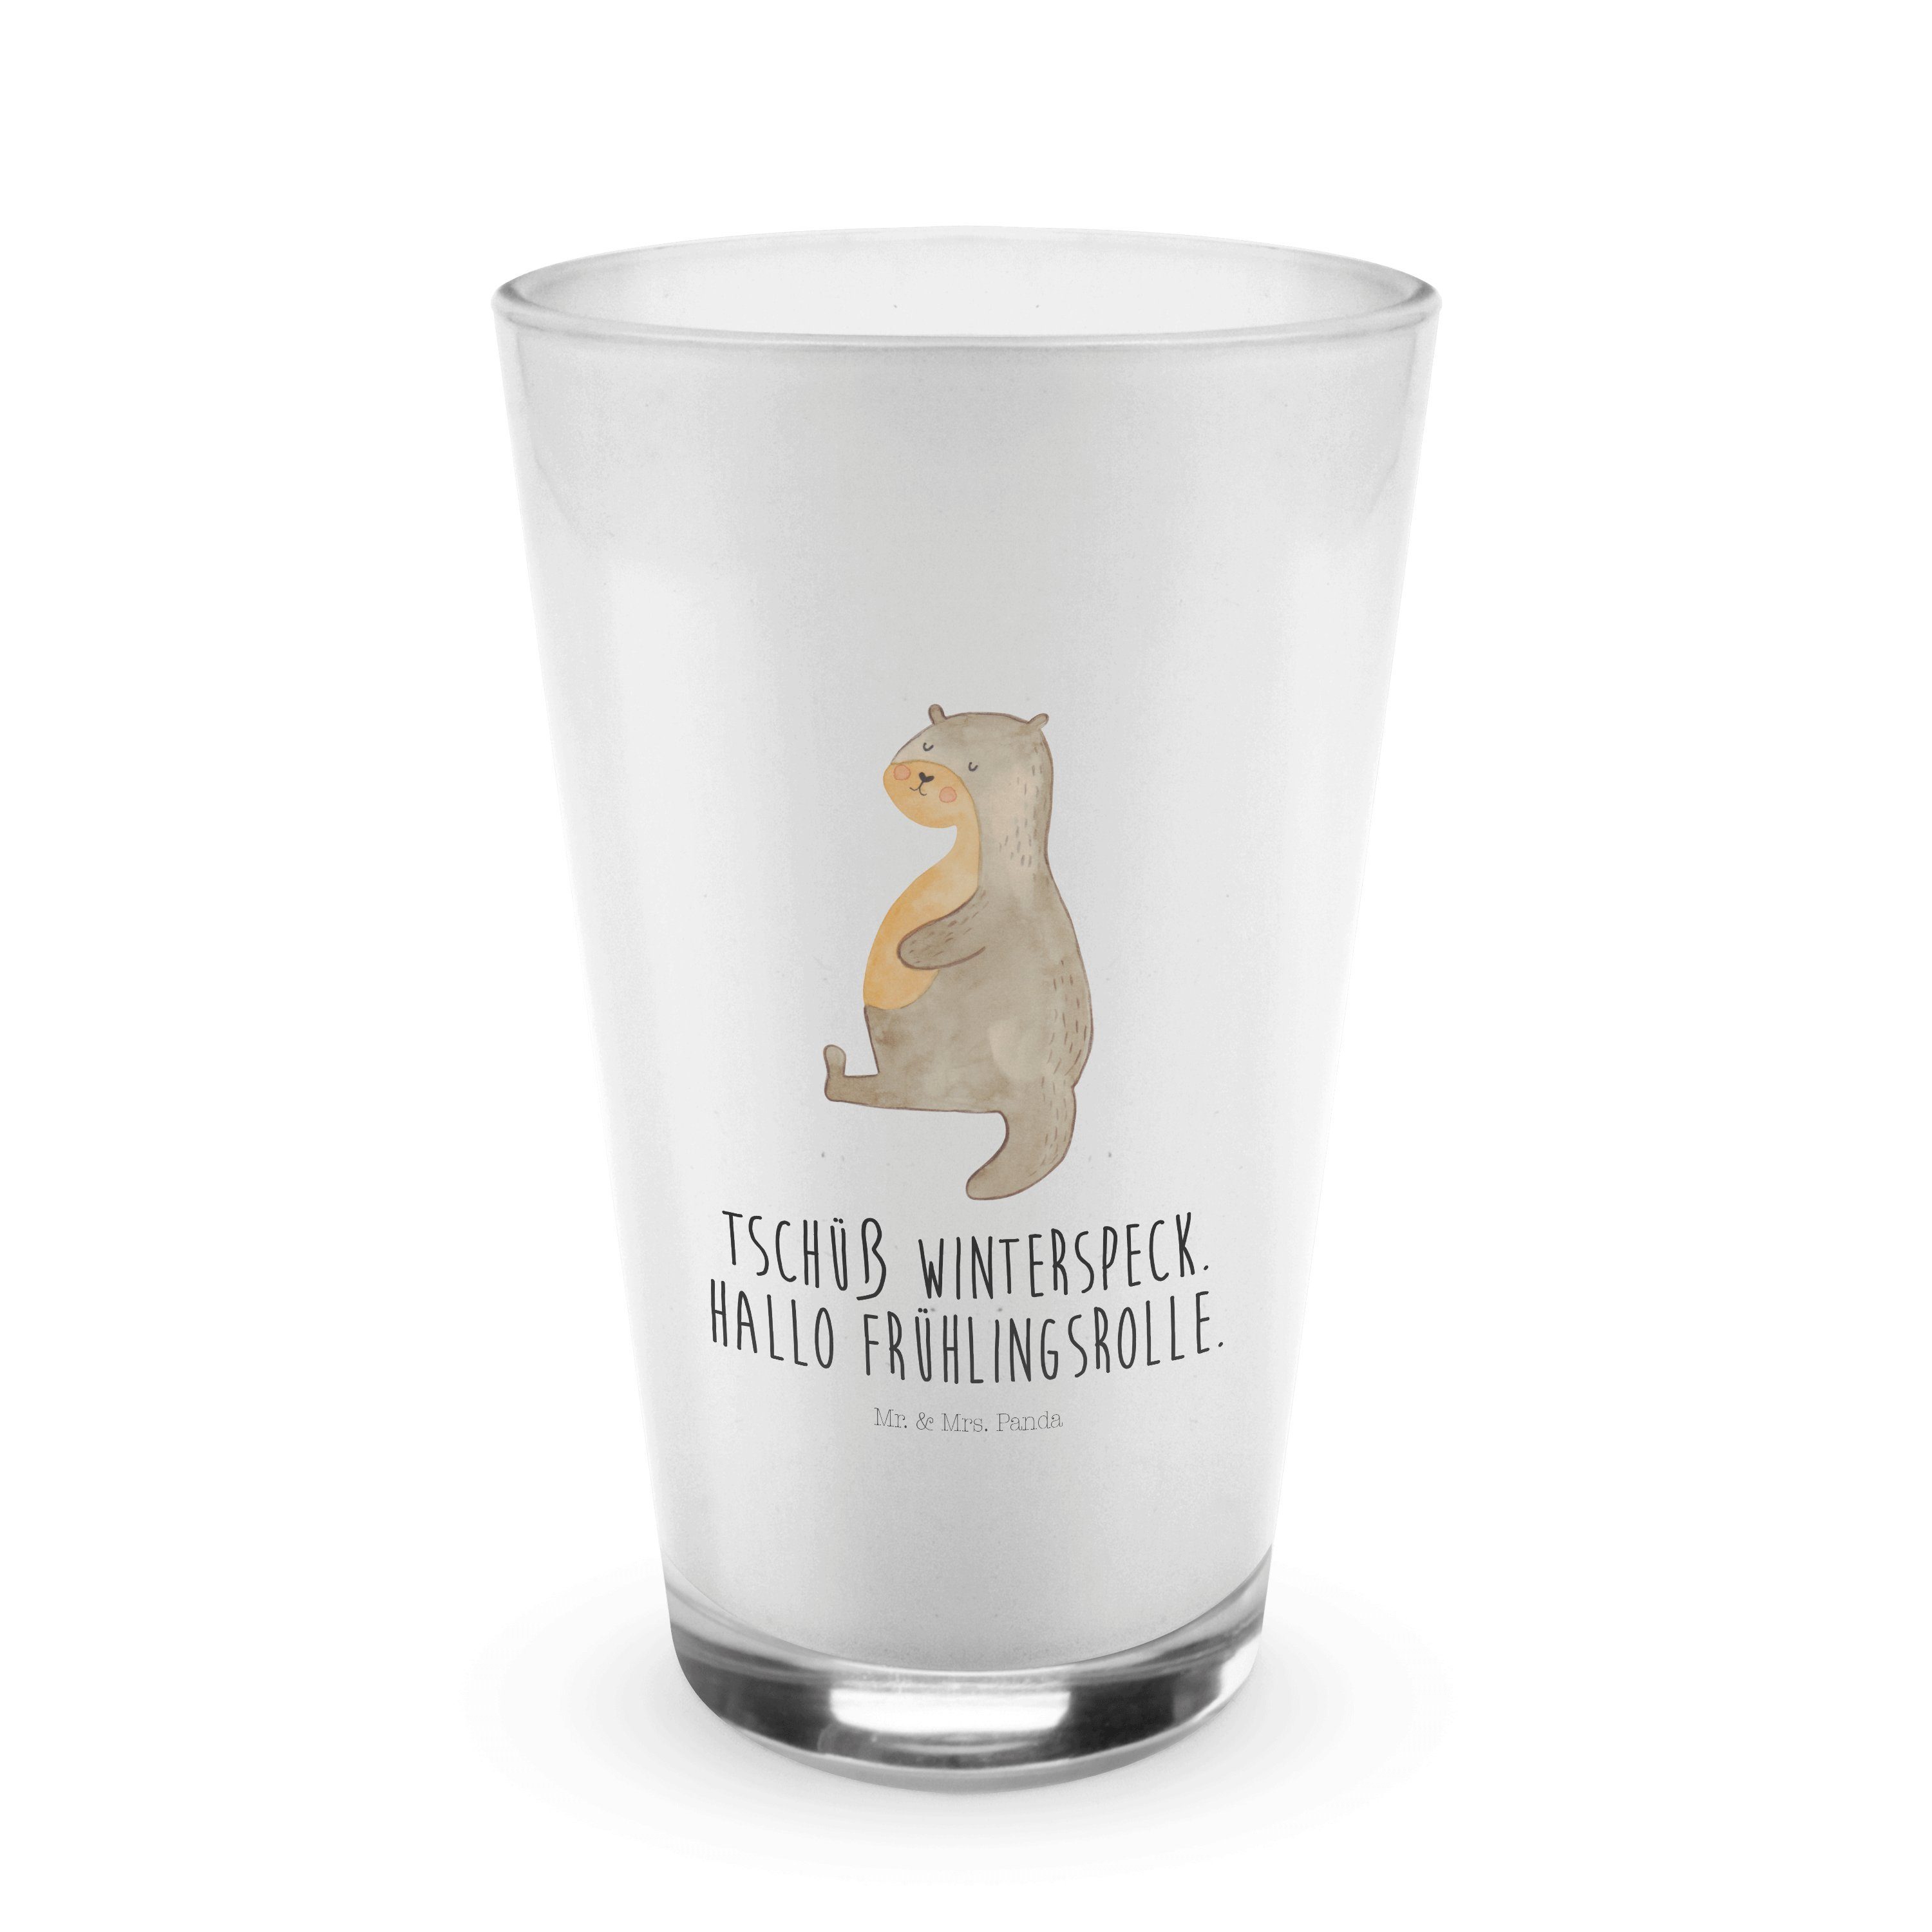 Mr. & Mrs. Panda Glas Otter Bauch - Transparent - Geschenk, Cappuccino Glas, Otter Seeotter, Premium Glas